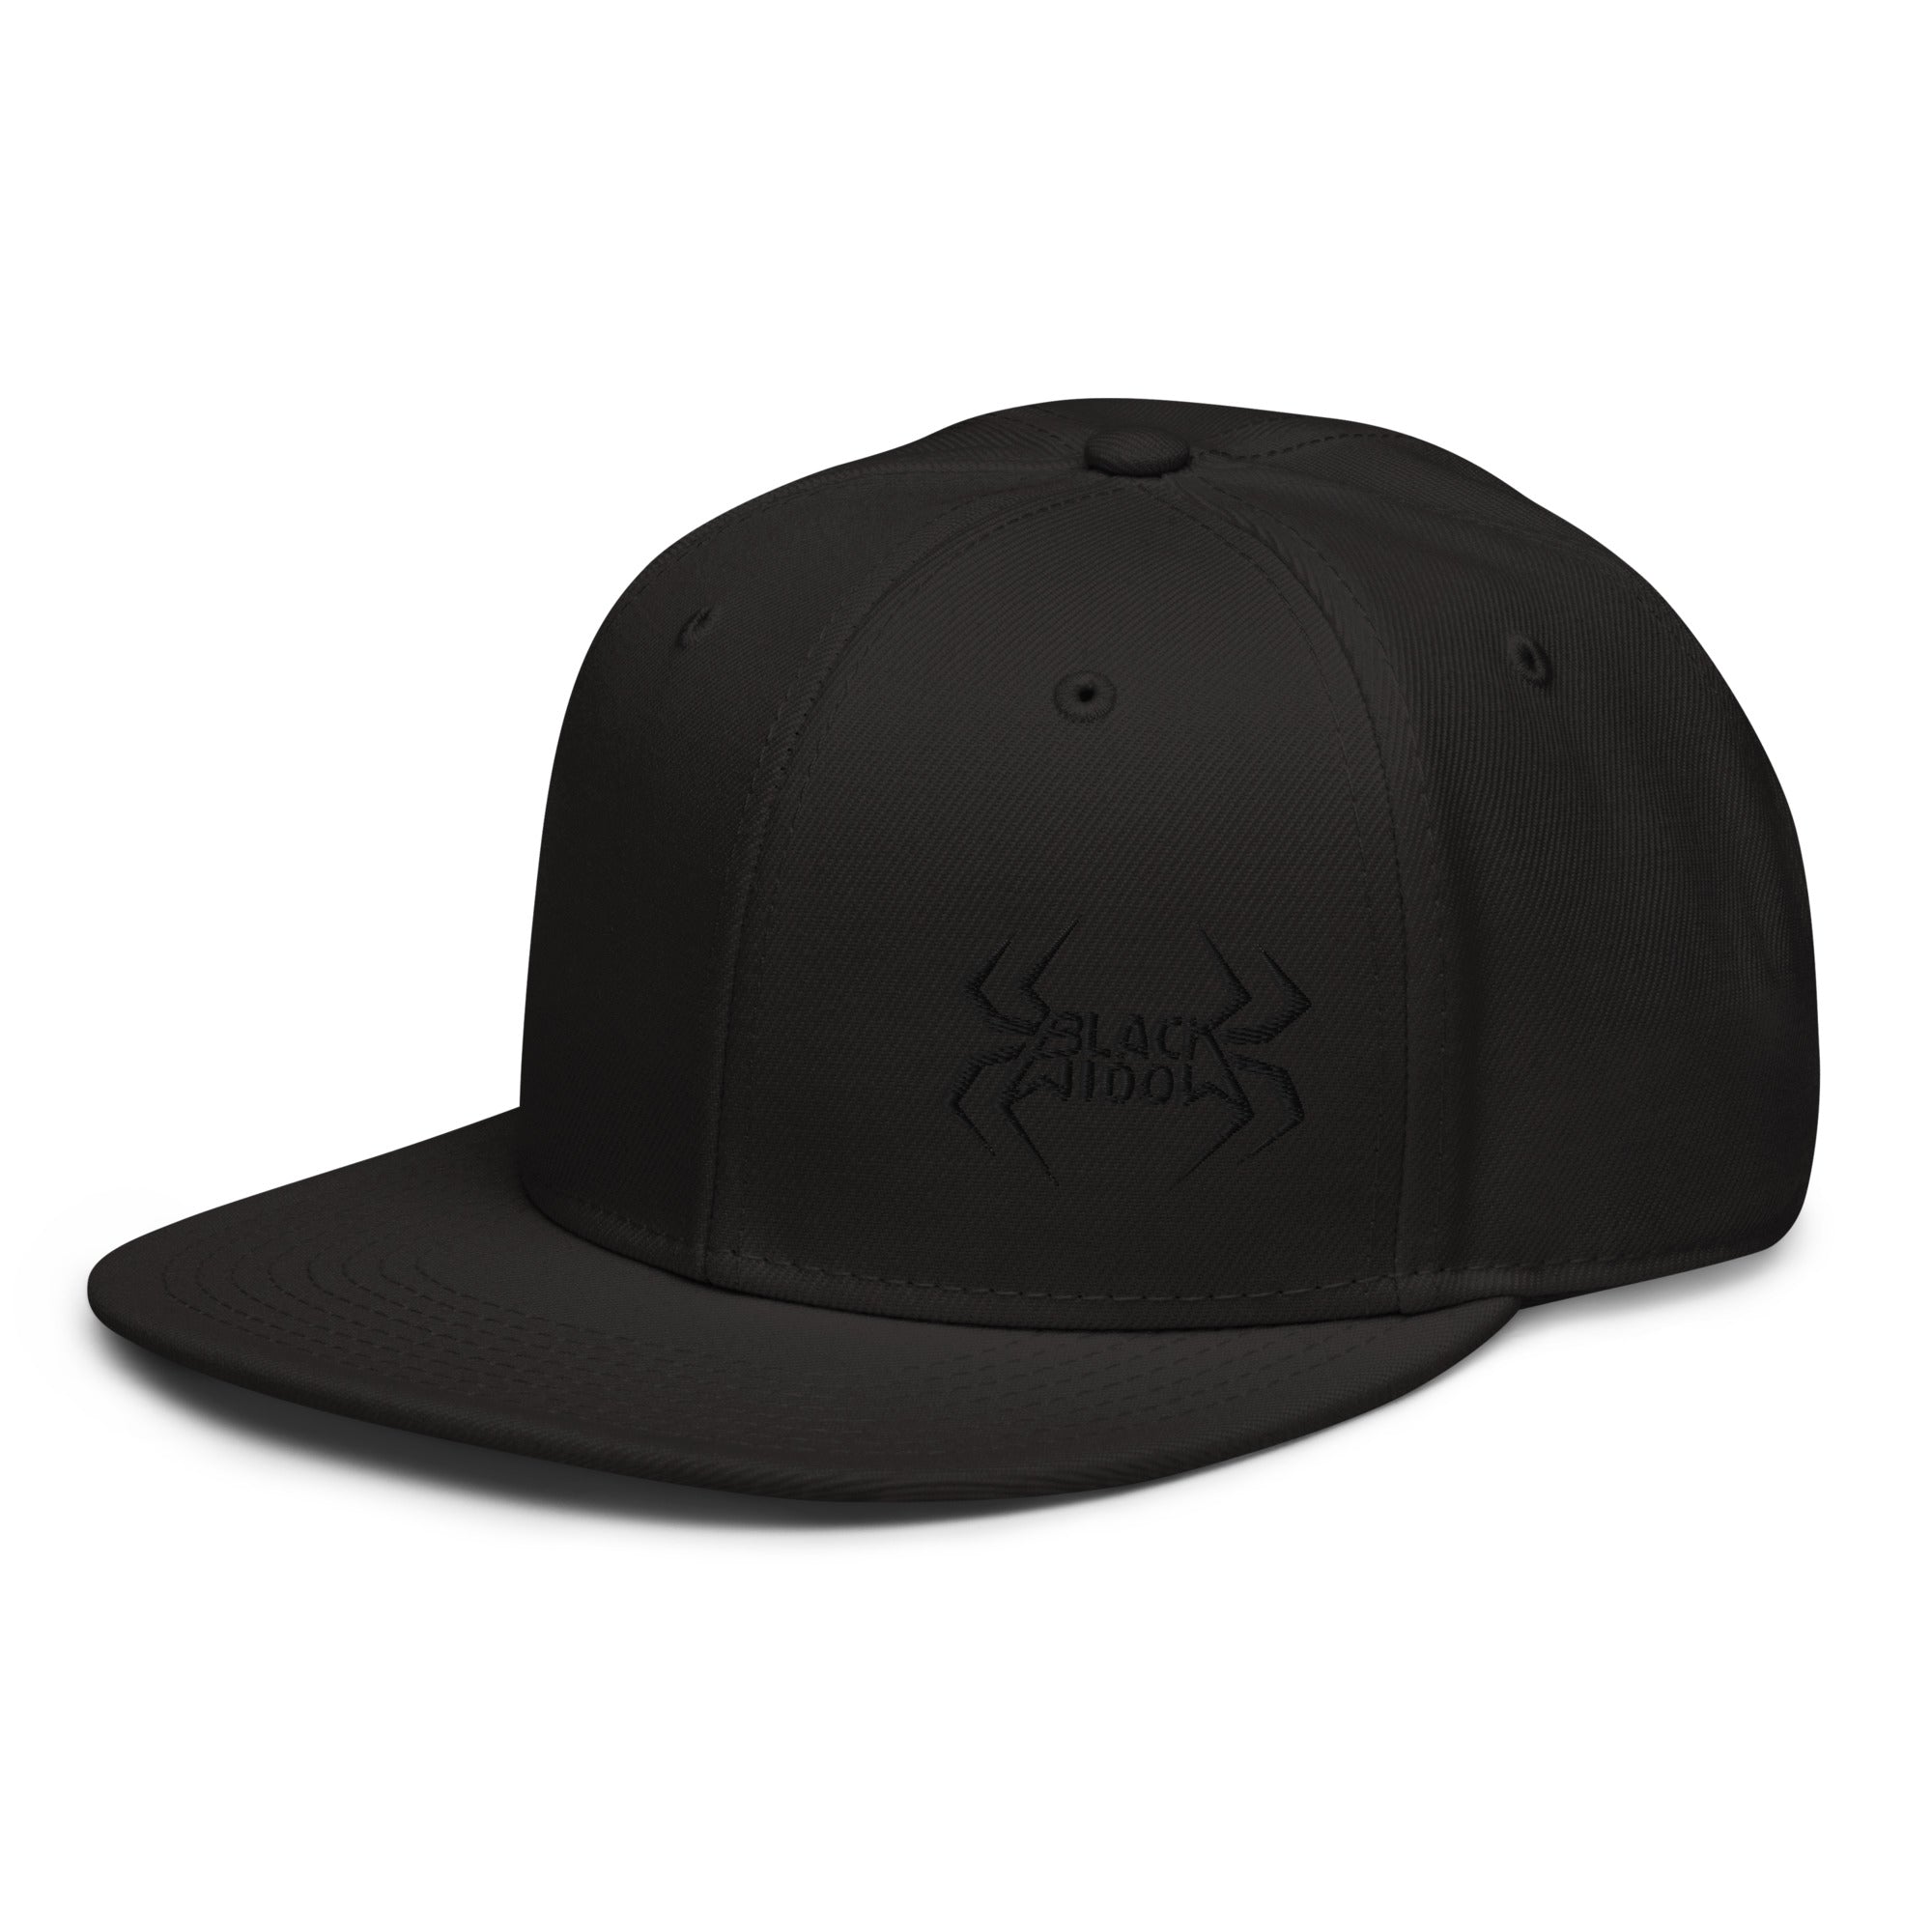 BW Snapback Hat (Black on Black)